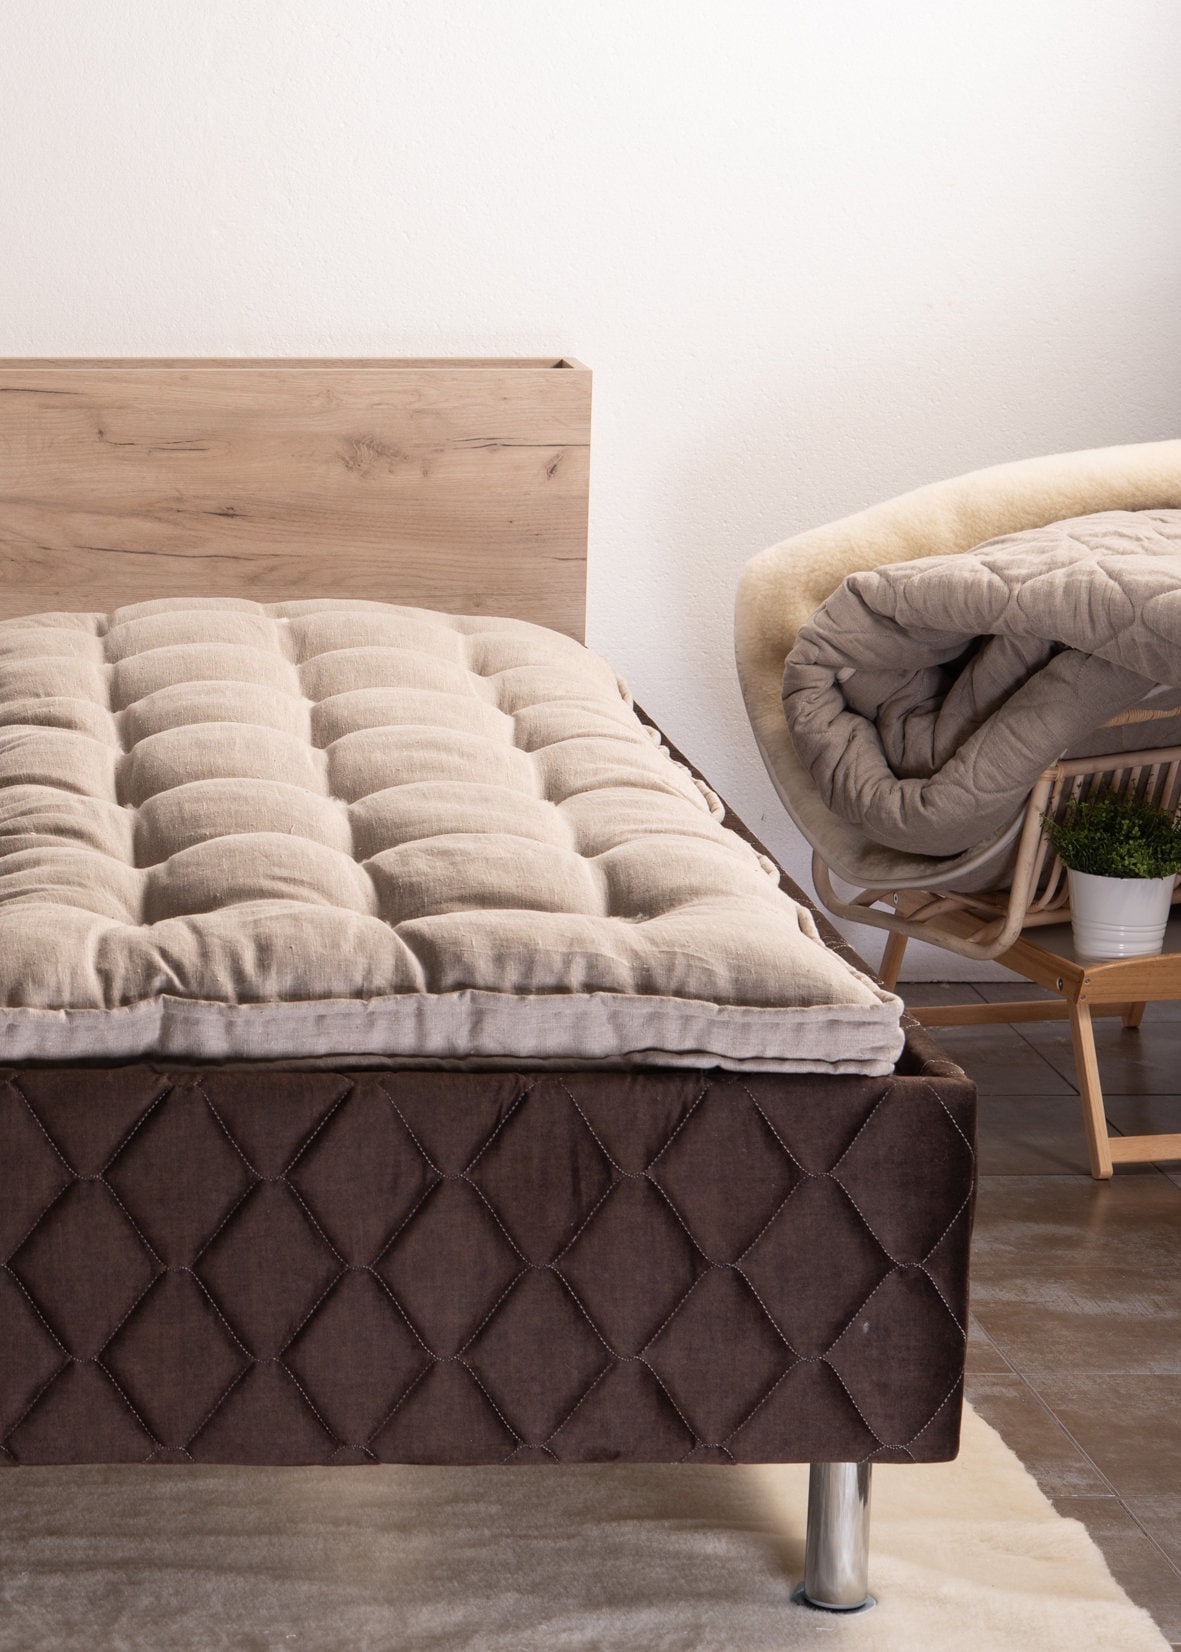 Natural merino wool mattress topper